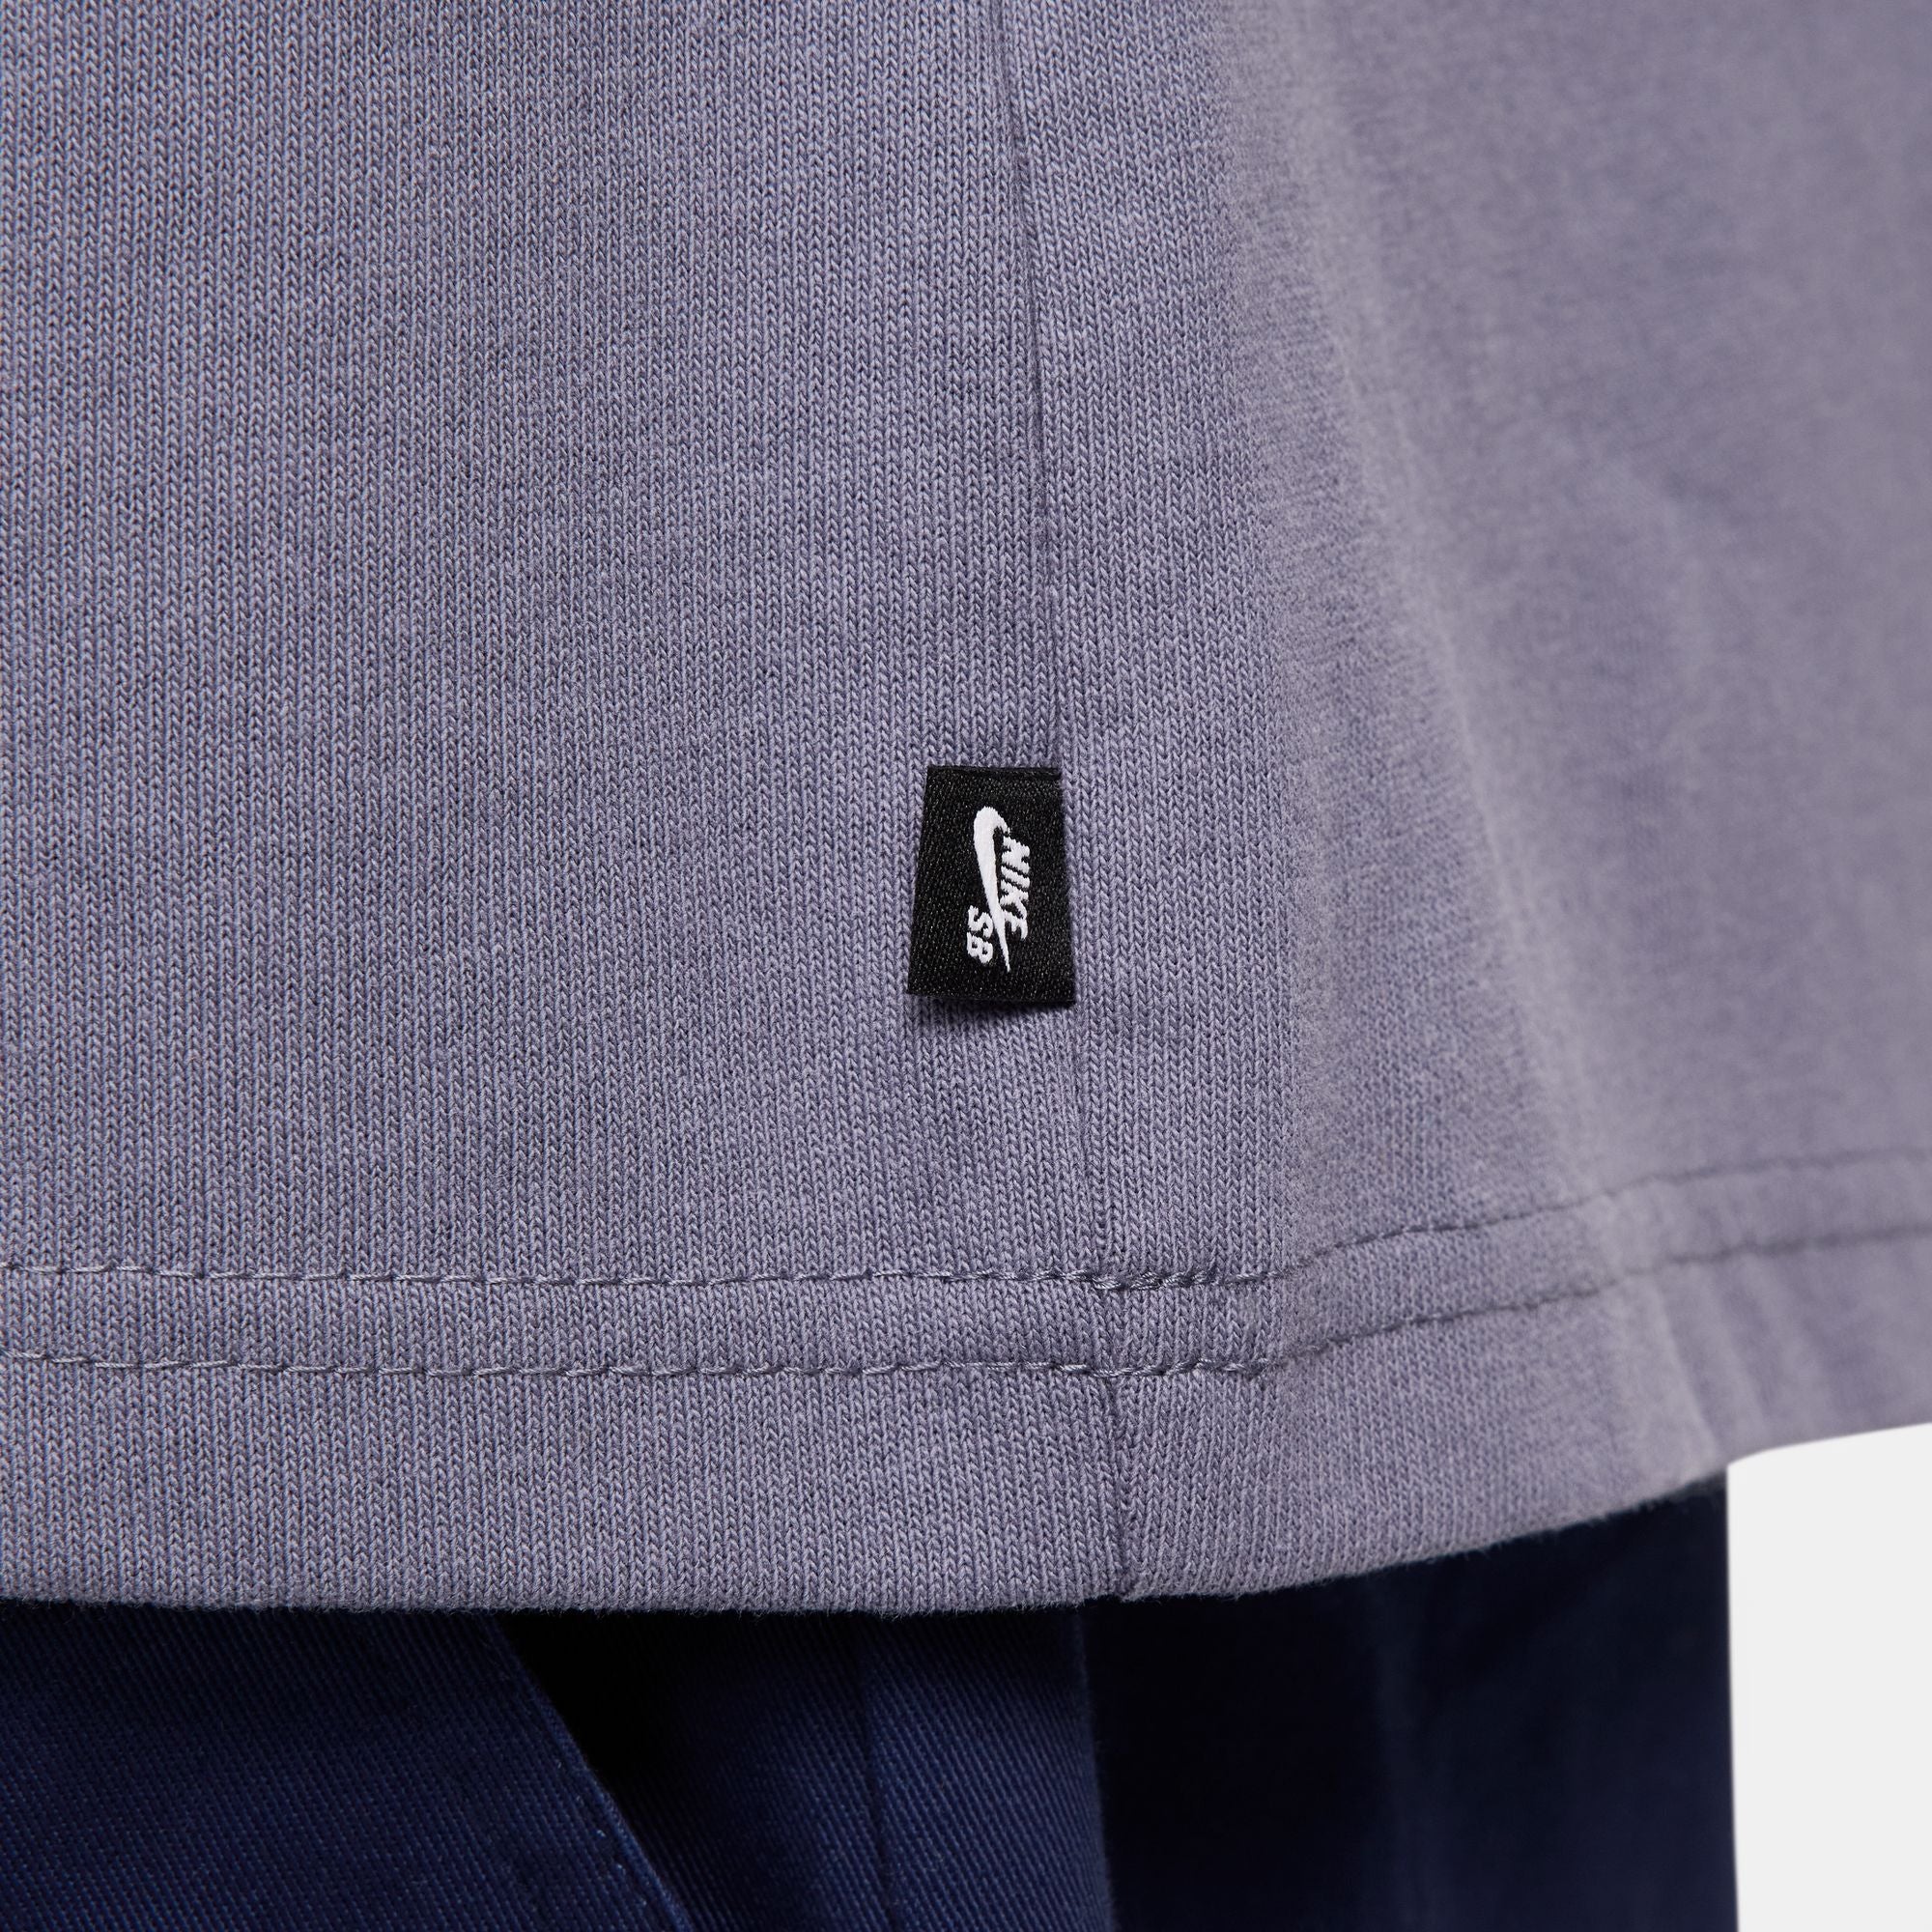 Purple nike sb shortsleeved T-shirt with feather logo on back and nike sb logo on chest. Free uk shipping over £50